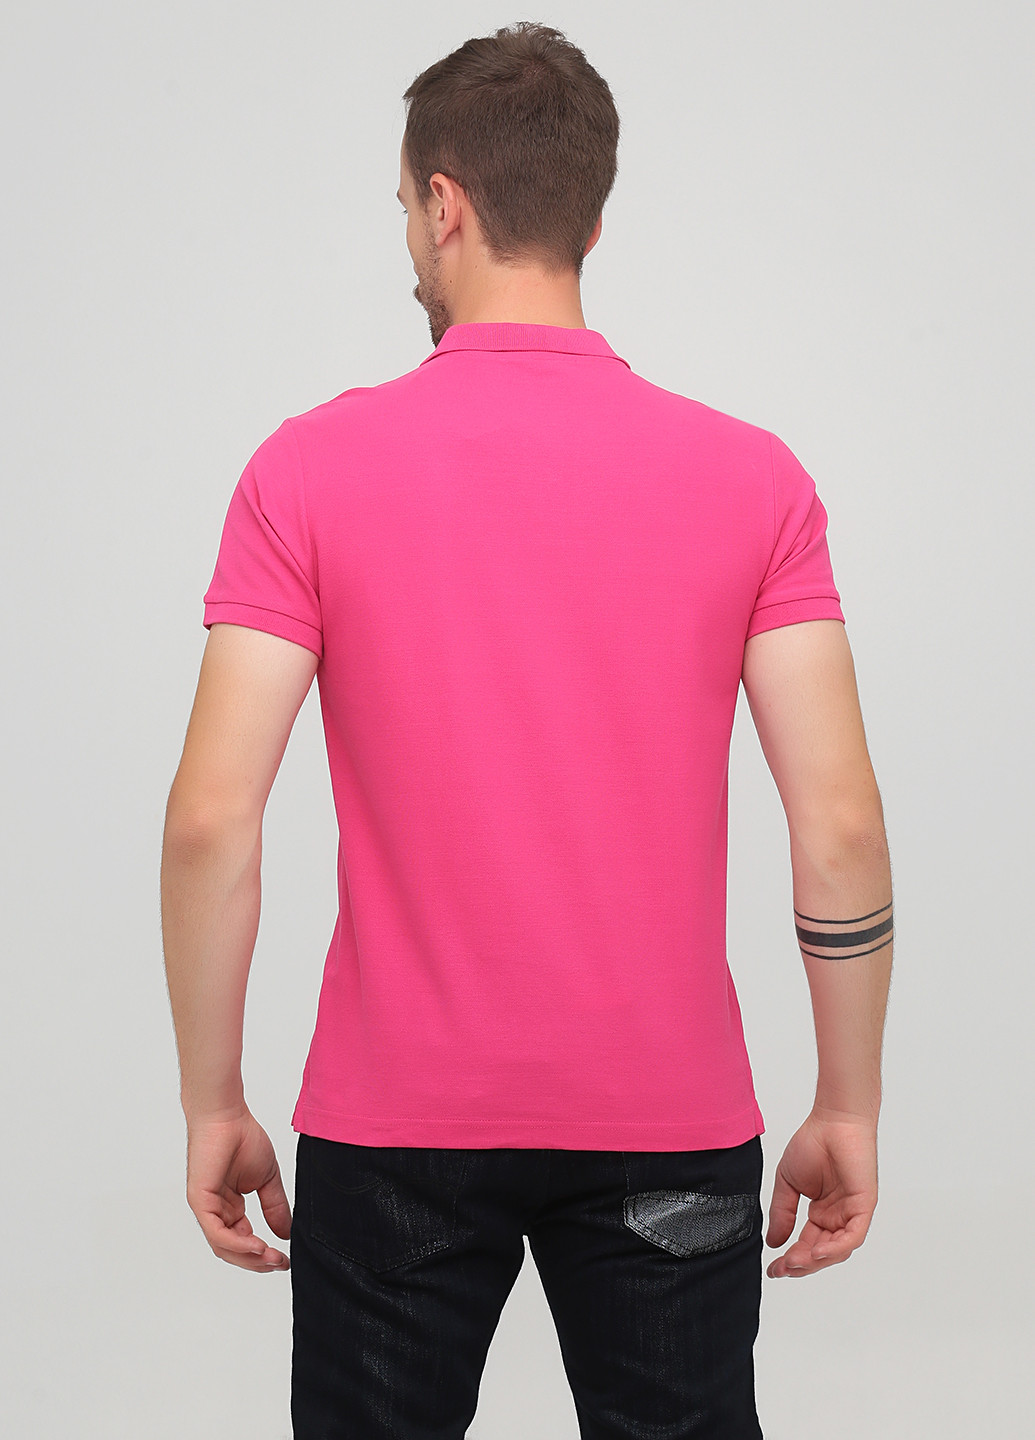 Розовая футболка-поло для мужчин Primark однотонная